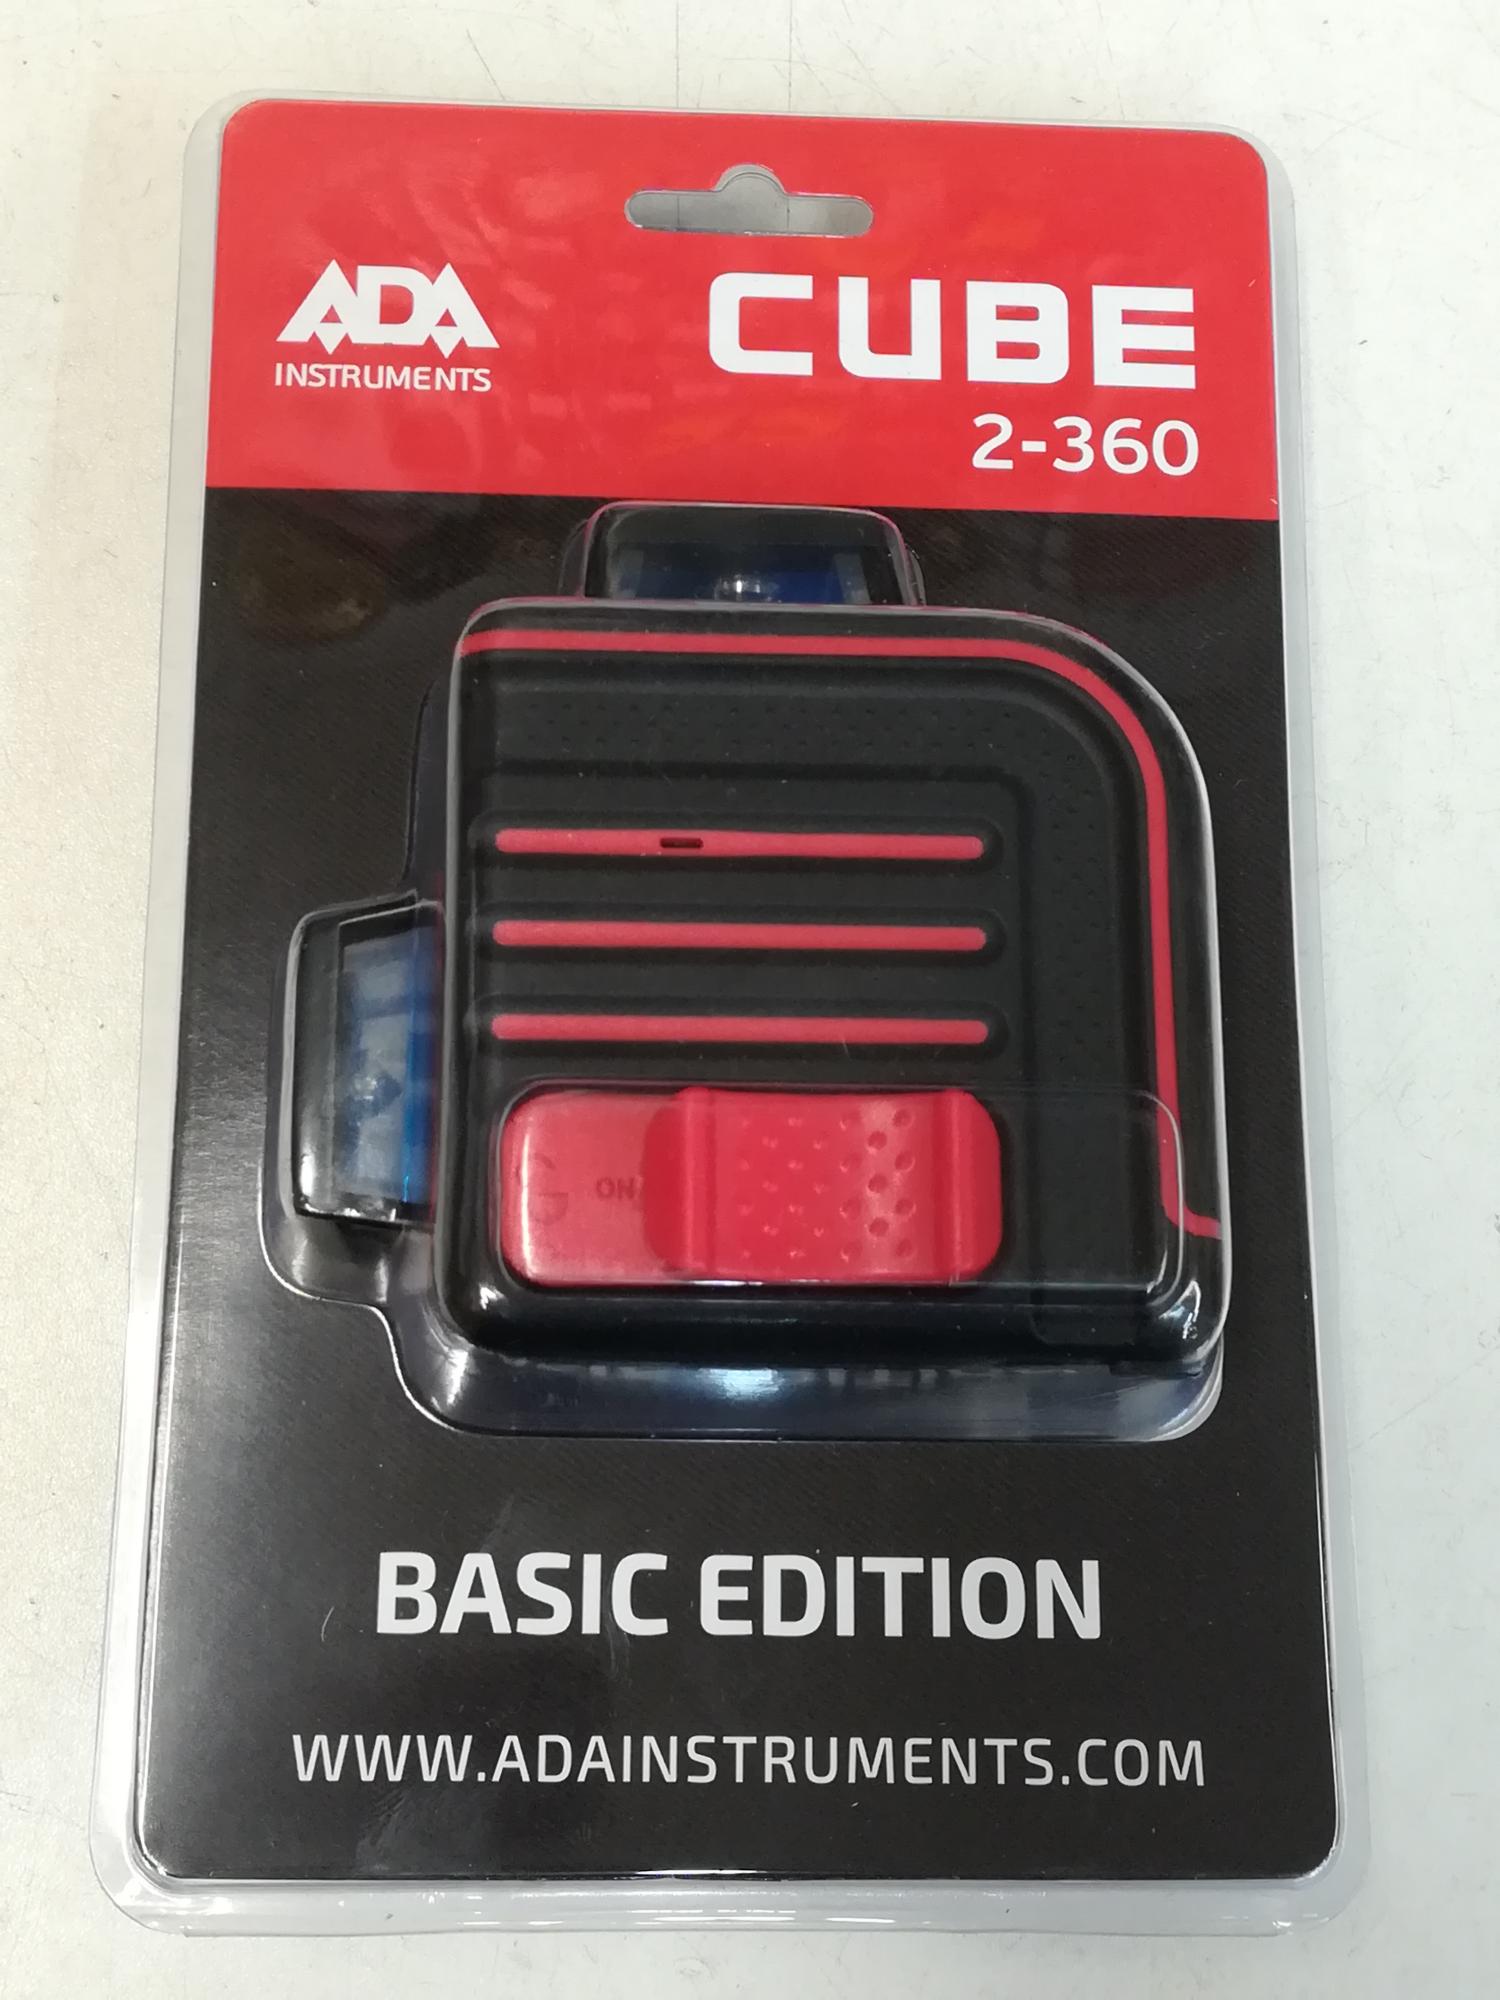 Ada cube 2 360. Cube 2-360 запчасти. Нивелир ada Cube 2-360 цены.